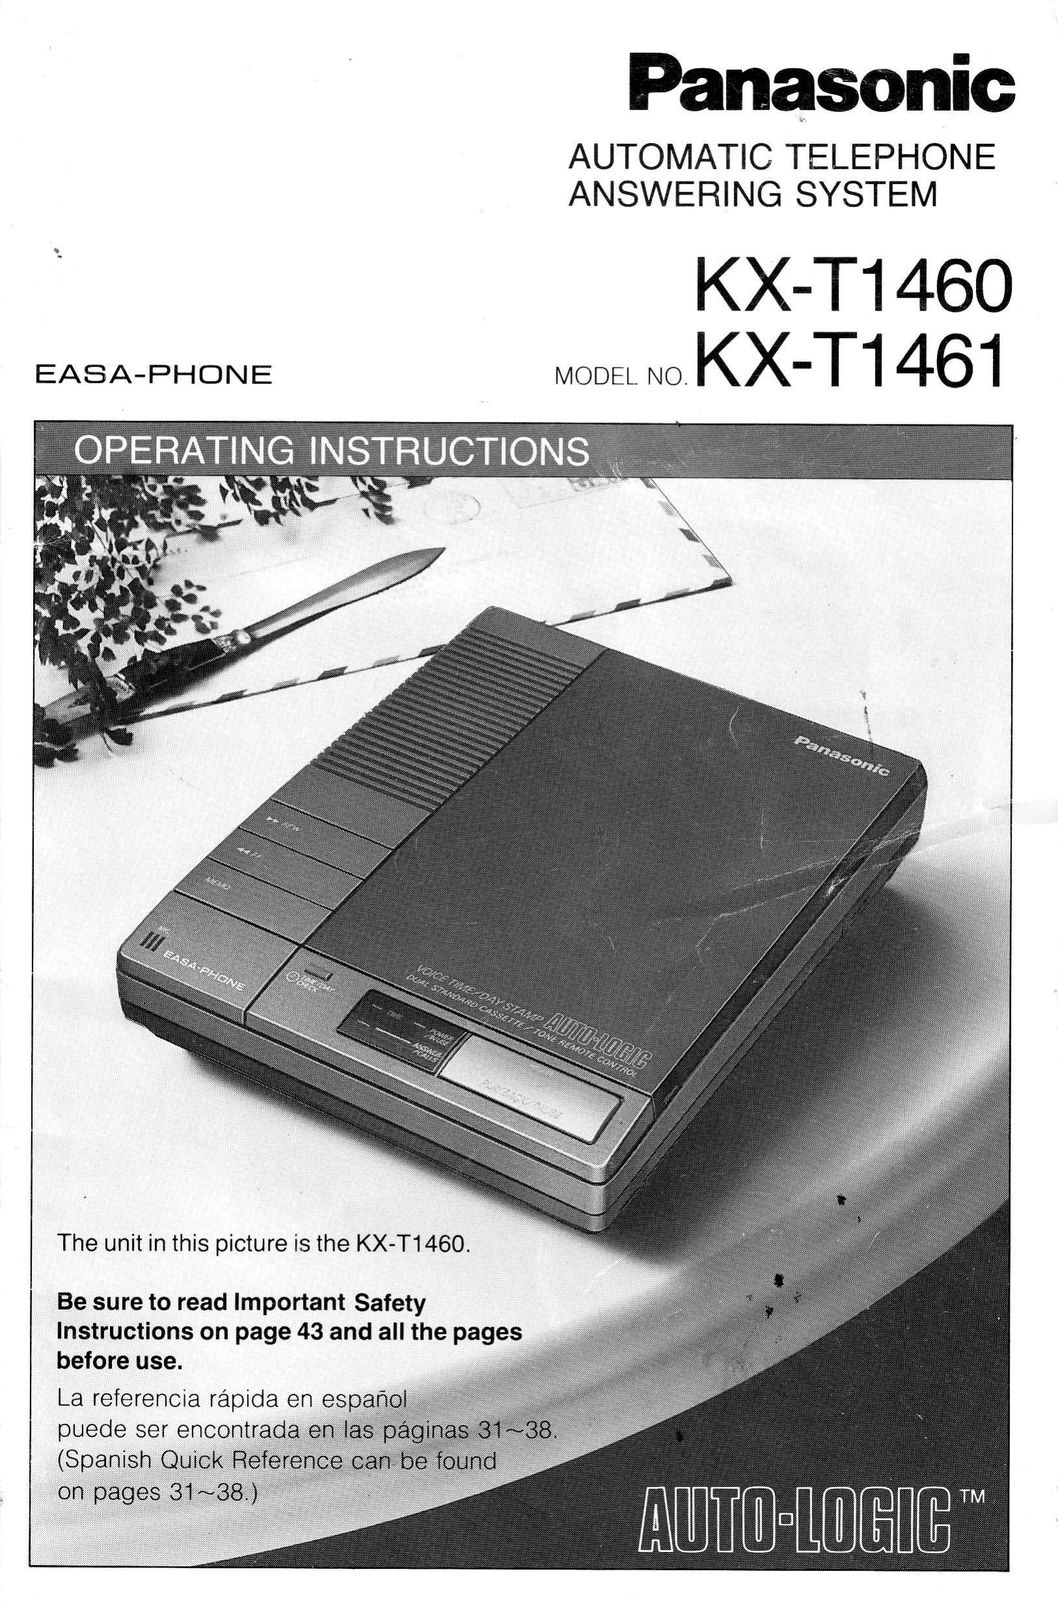 Panasonic KX-T1 461 Answering Machine User Manual